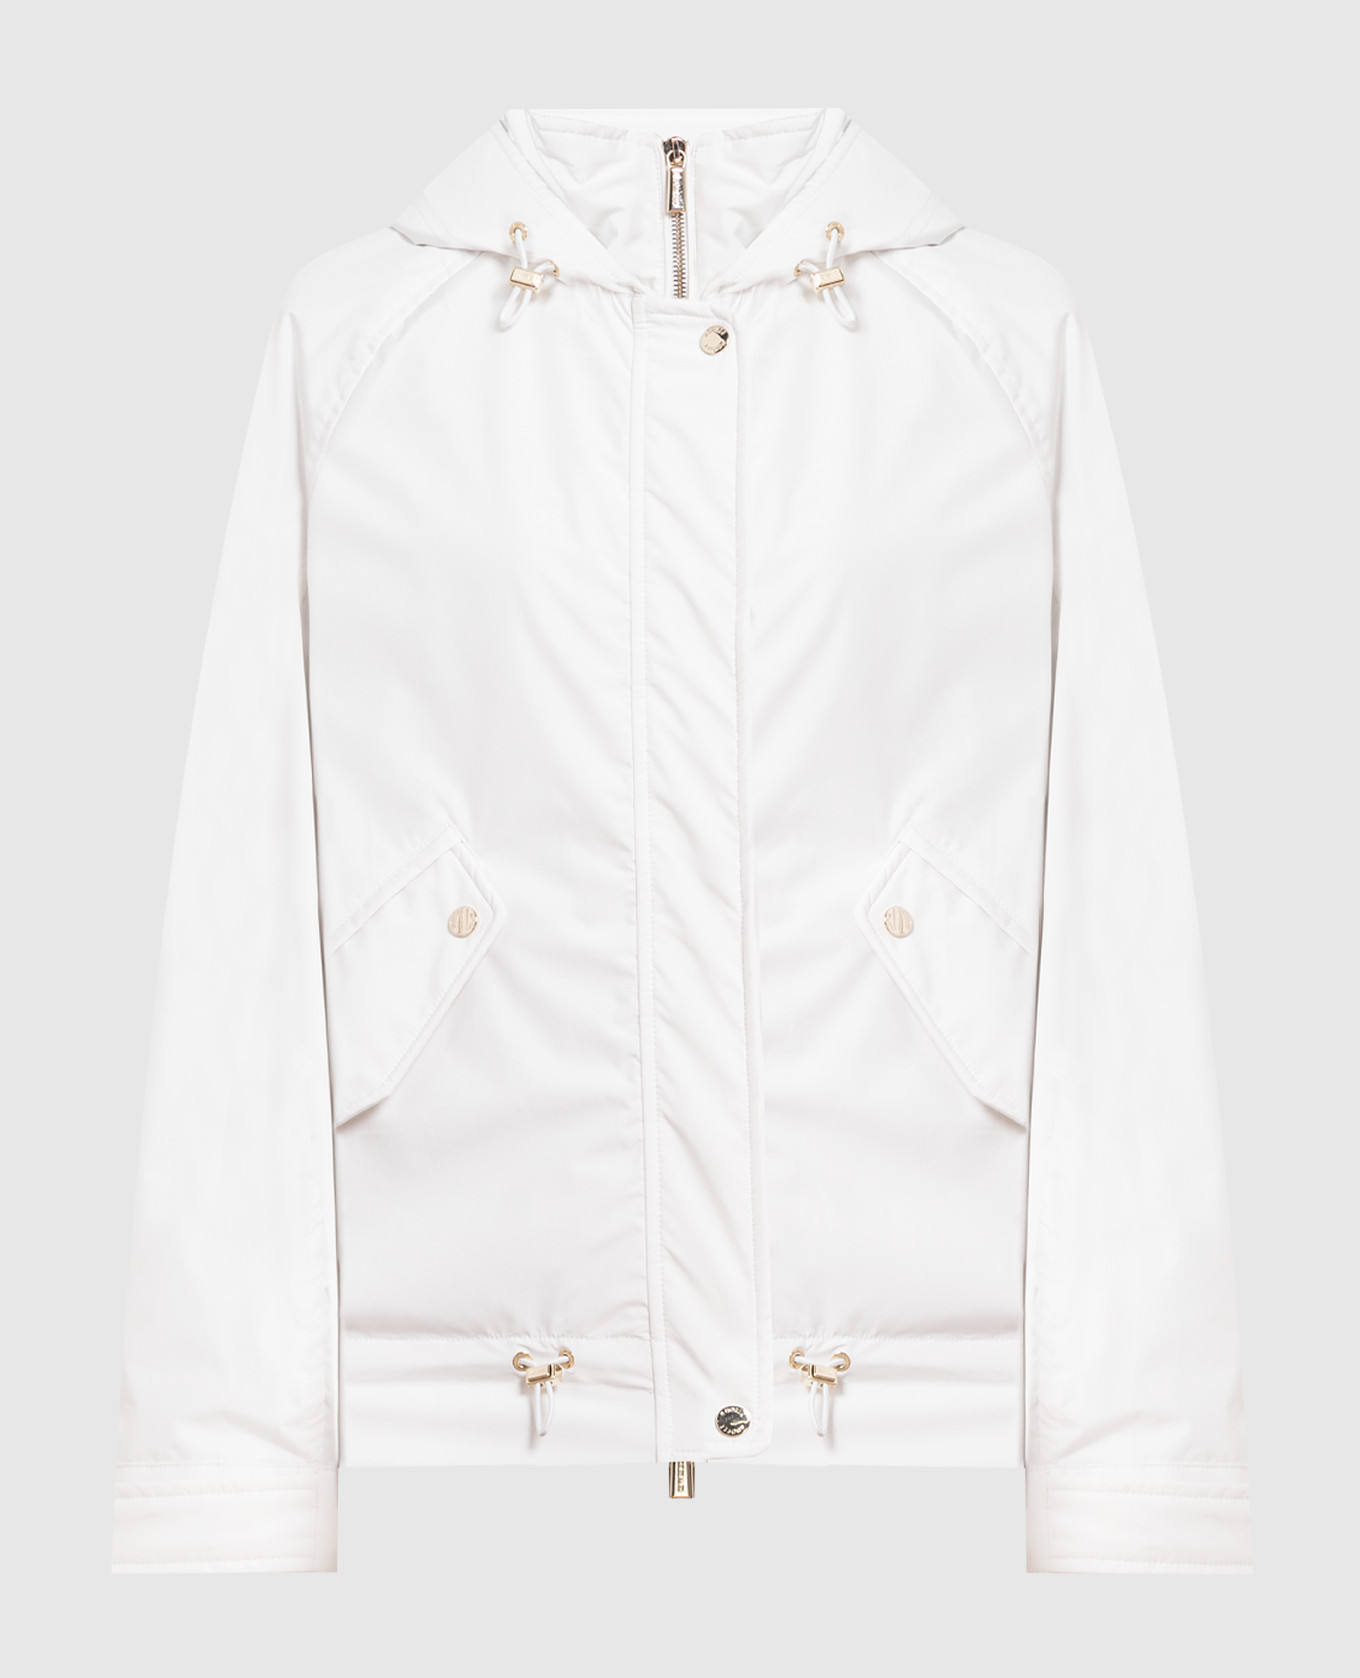 La giacca bianca di Jill